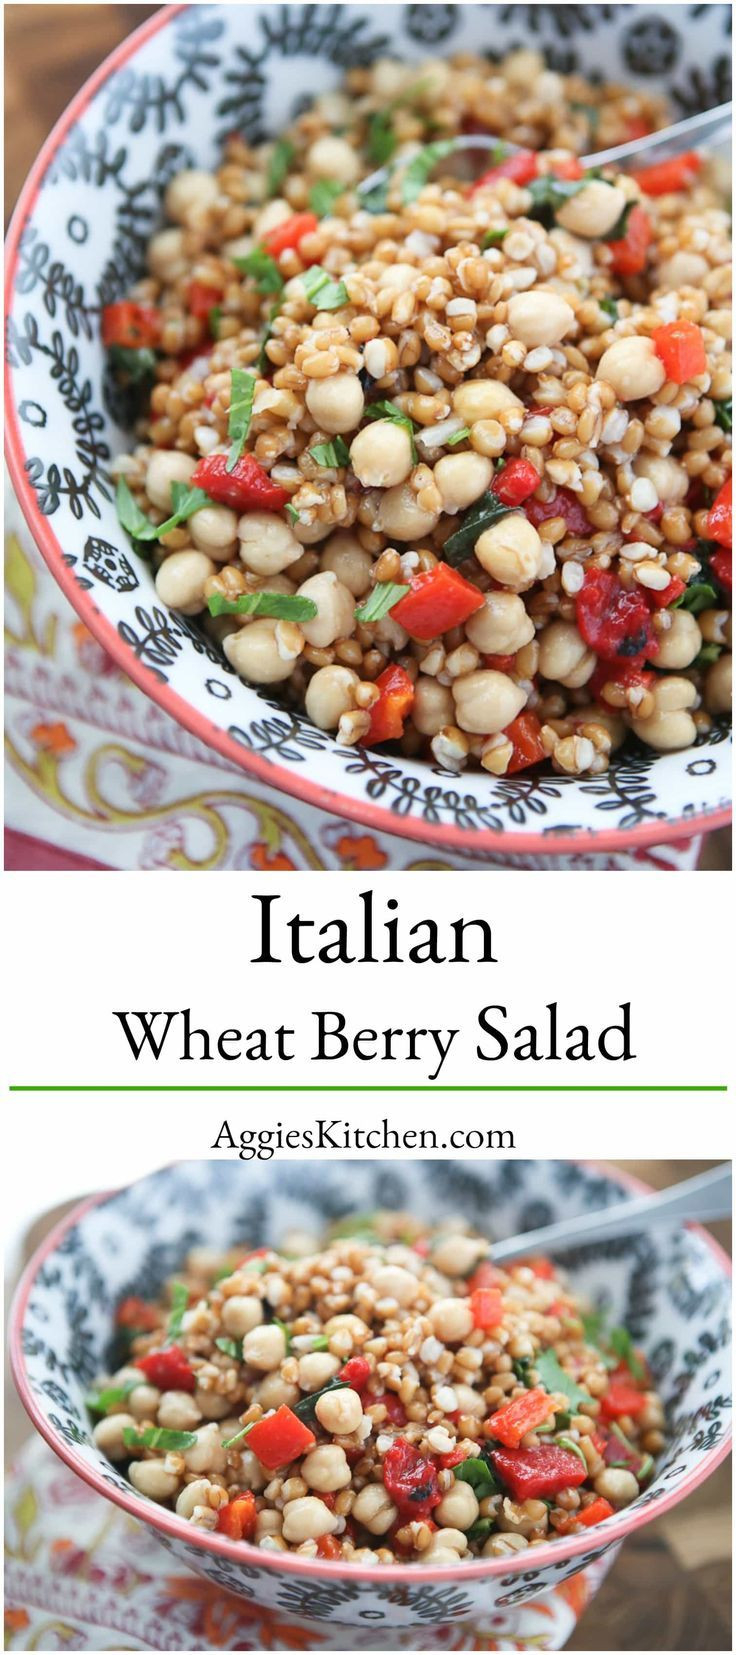 Wheat Berry Salad Recipes
 Italian Wheat Berry Salad Recipe